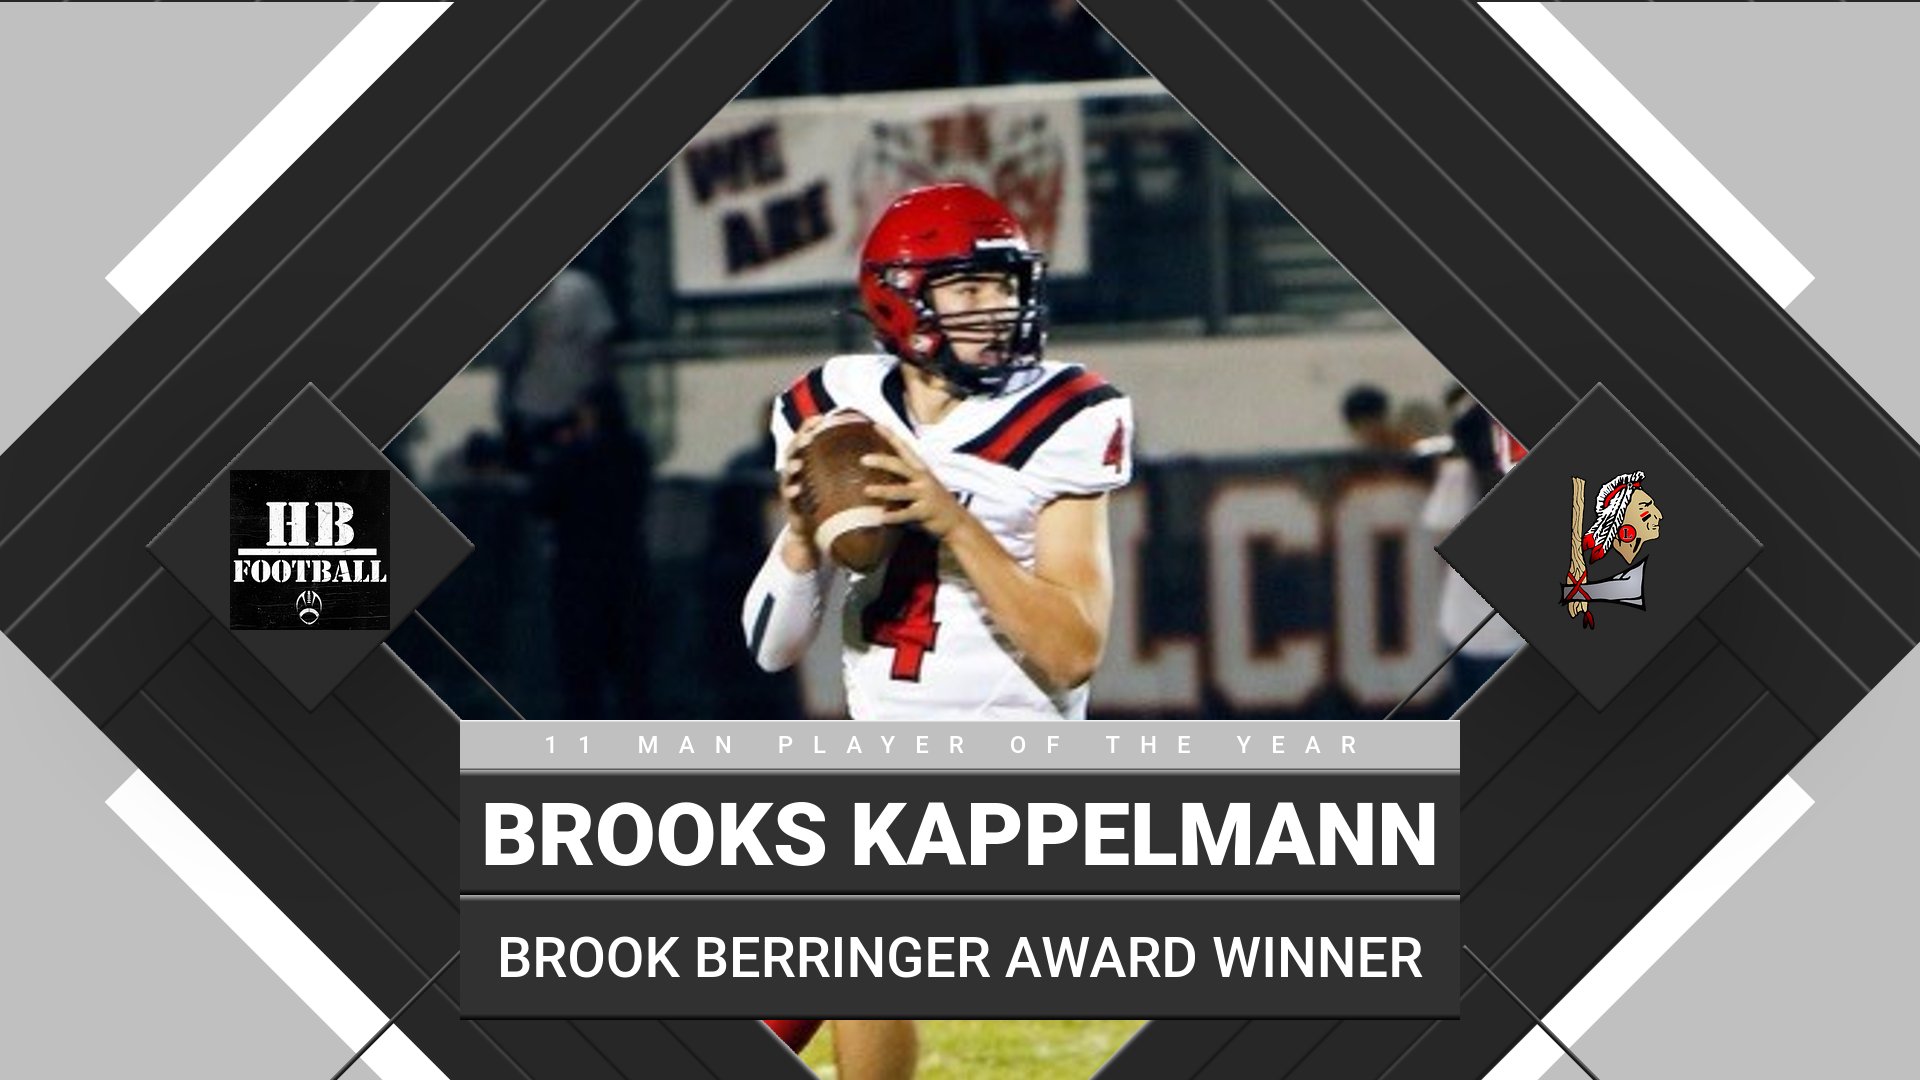 Brooks Kappelmann Wins Brook Berringer Award